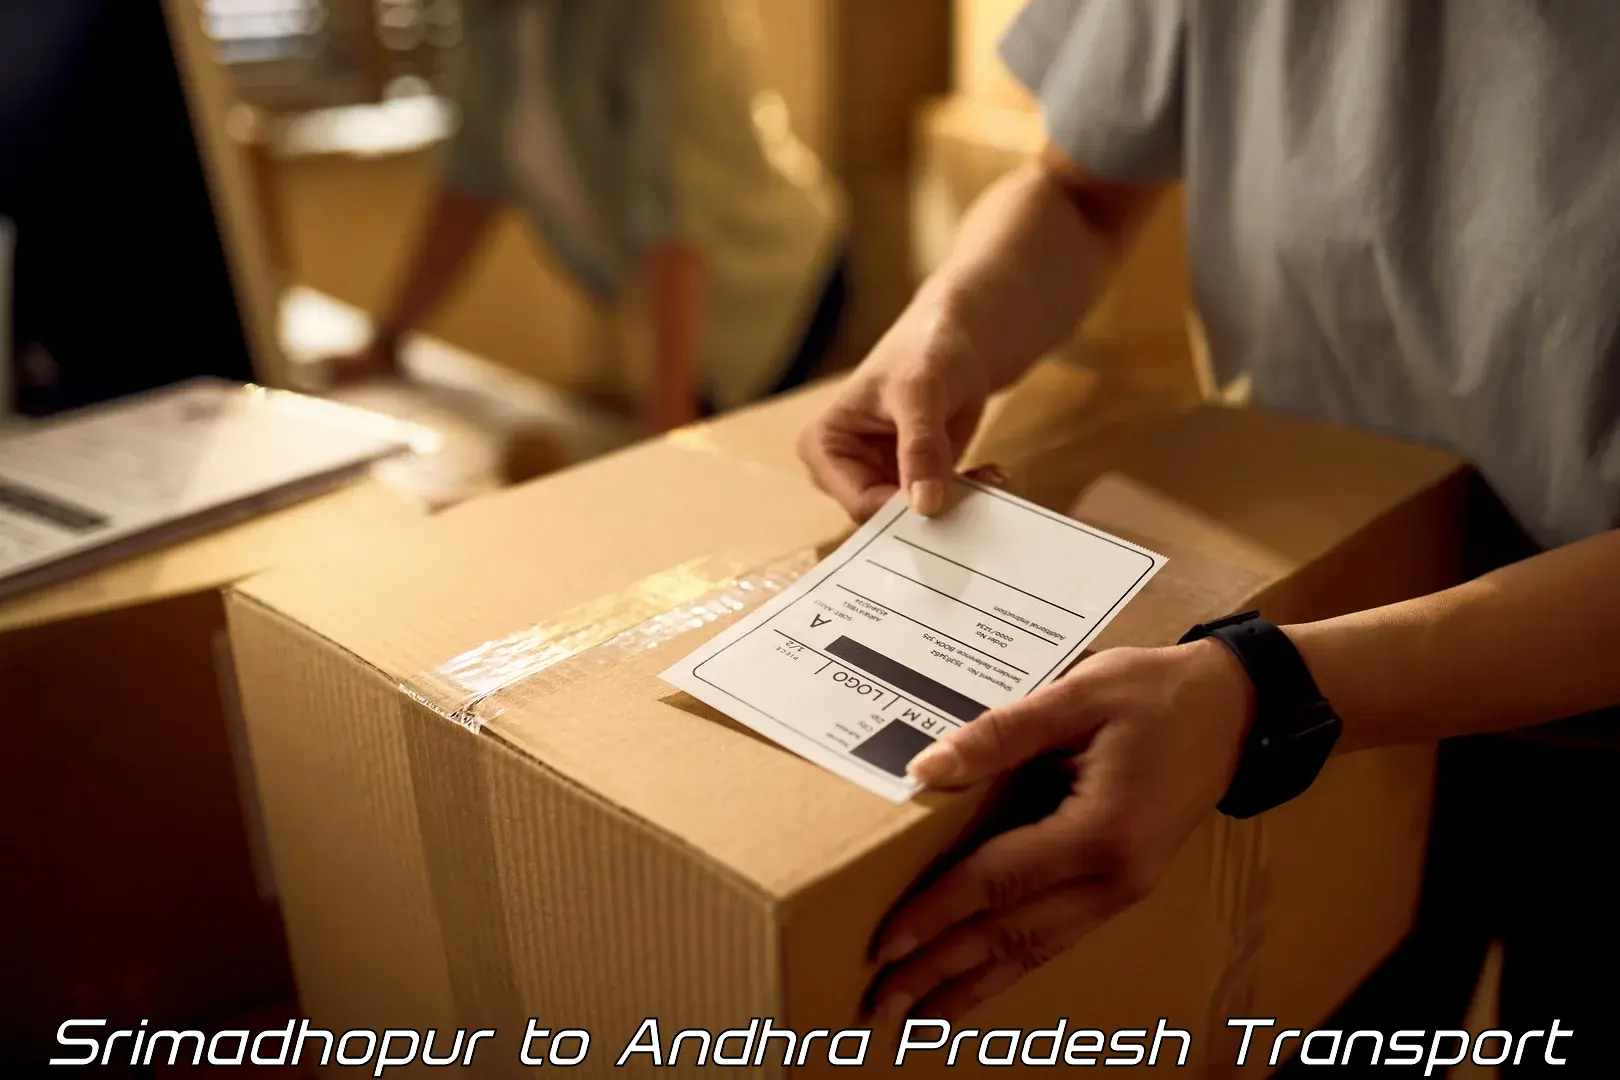 Container transport service Srimadhopur to Tripuranthakam